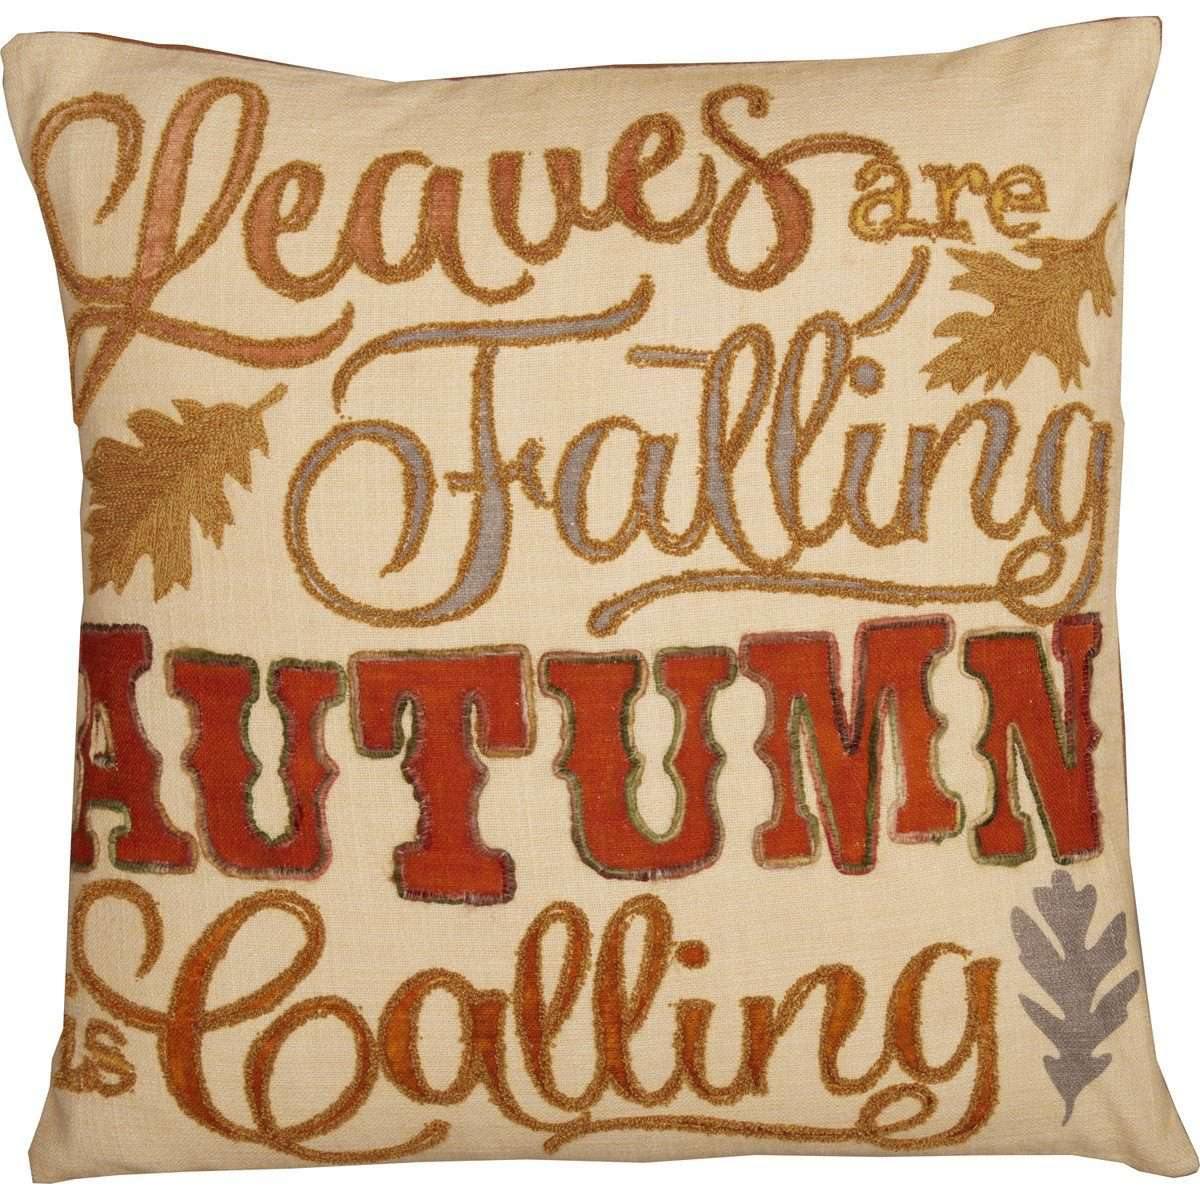 Autumn Calling Pillow 18x18 VHC Brands front